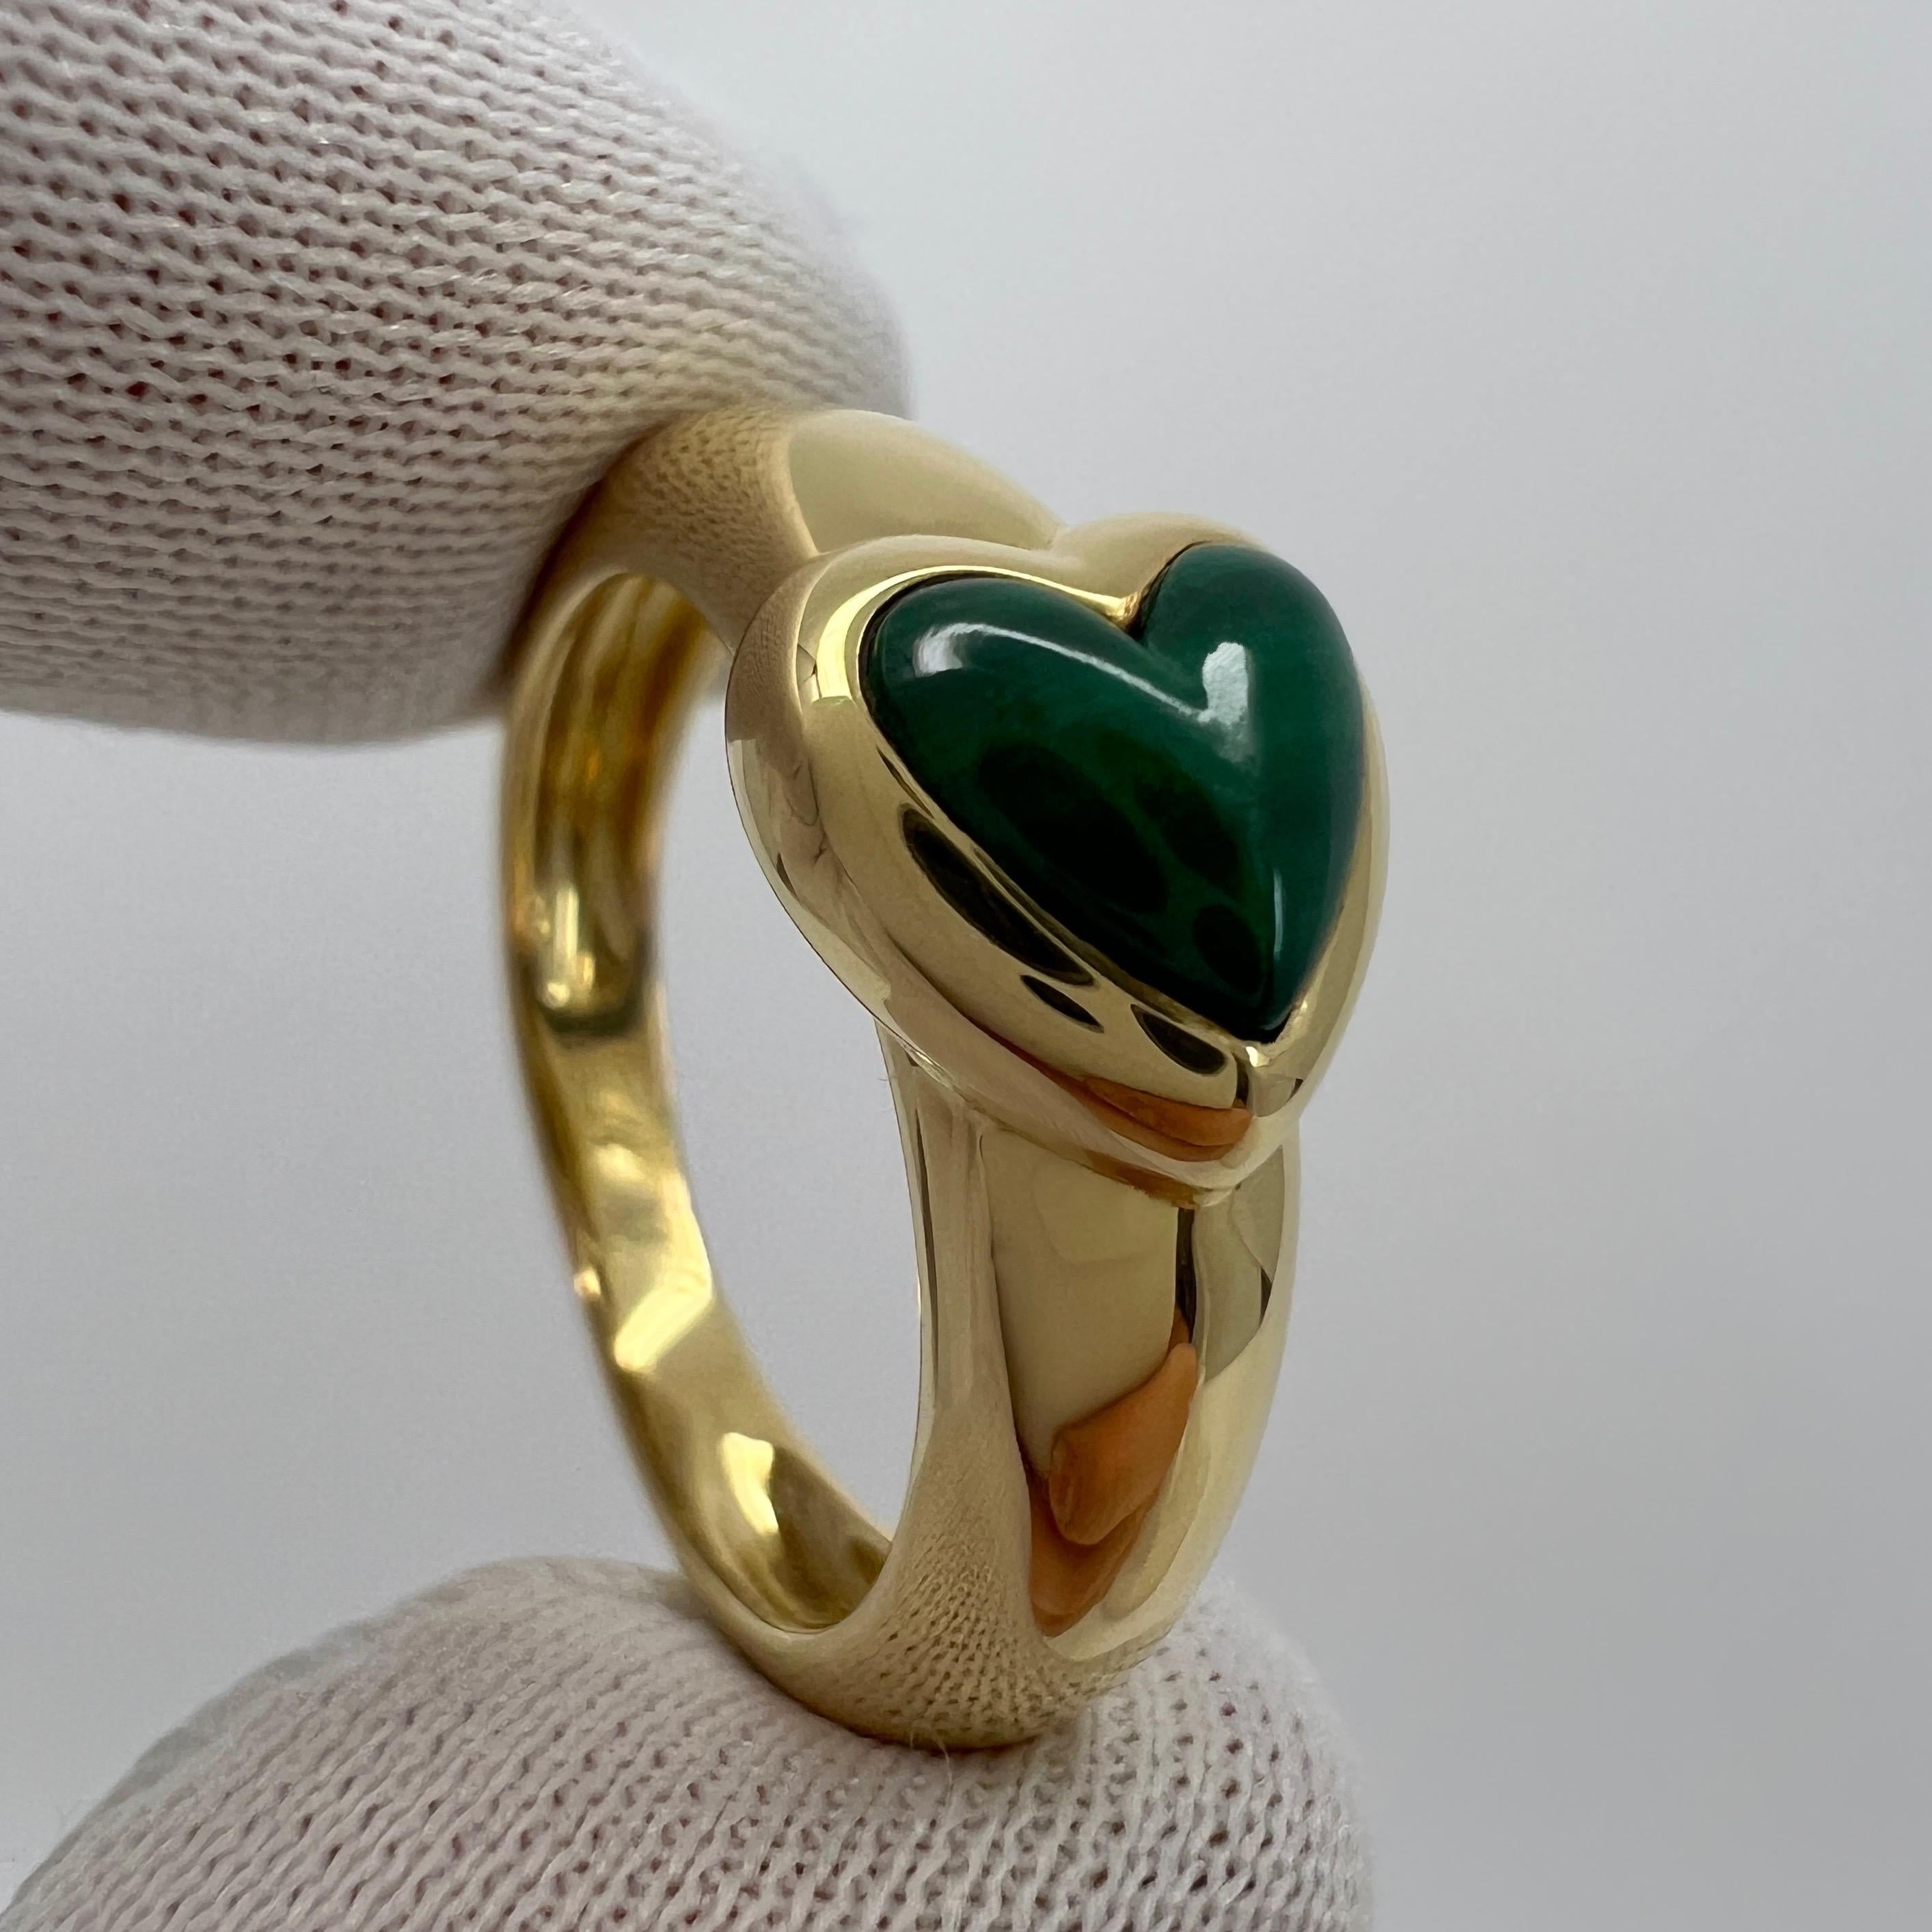 Rare Vintage Van Cleef & Arpels Green Malachite Heart Cut 18k Yellow Gold Ring 1